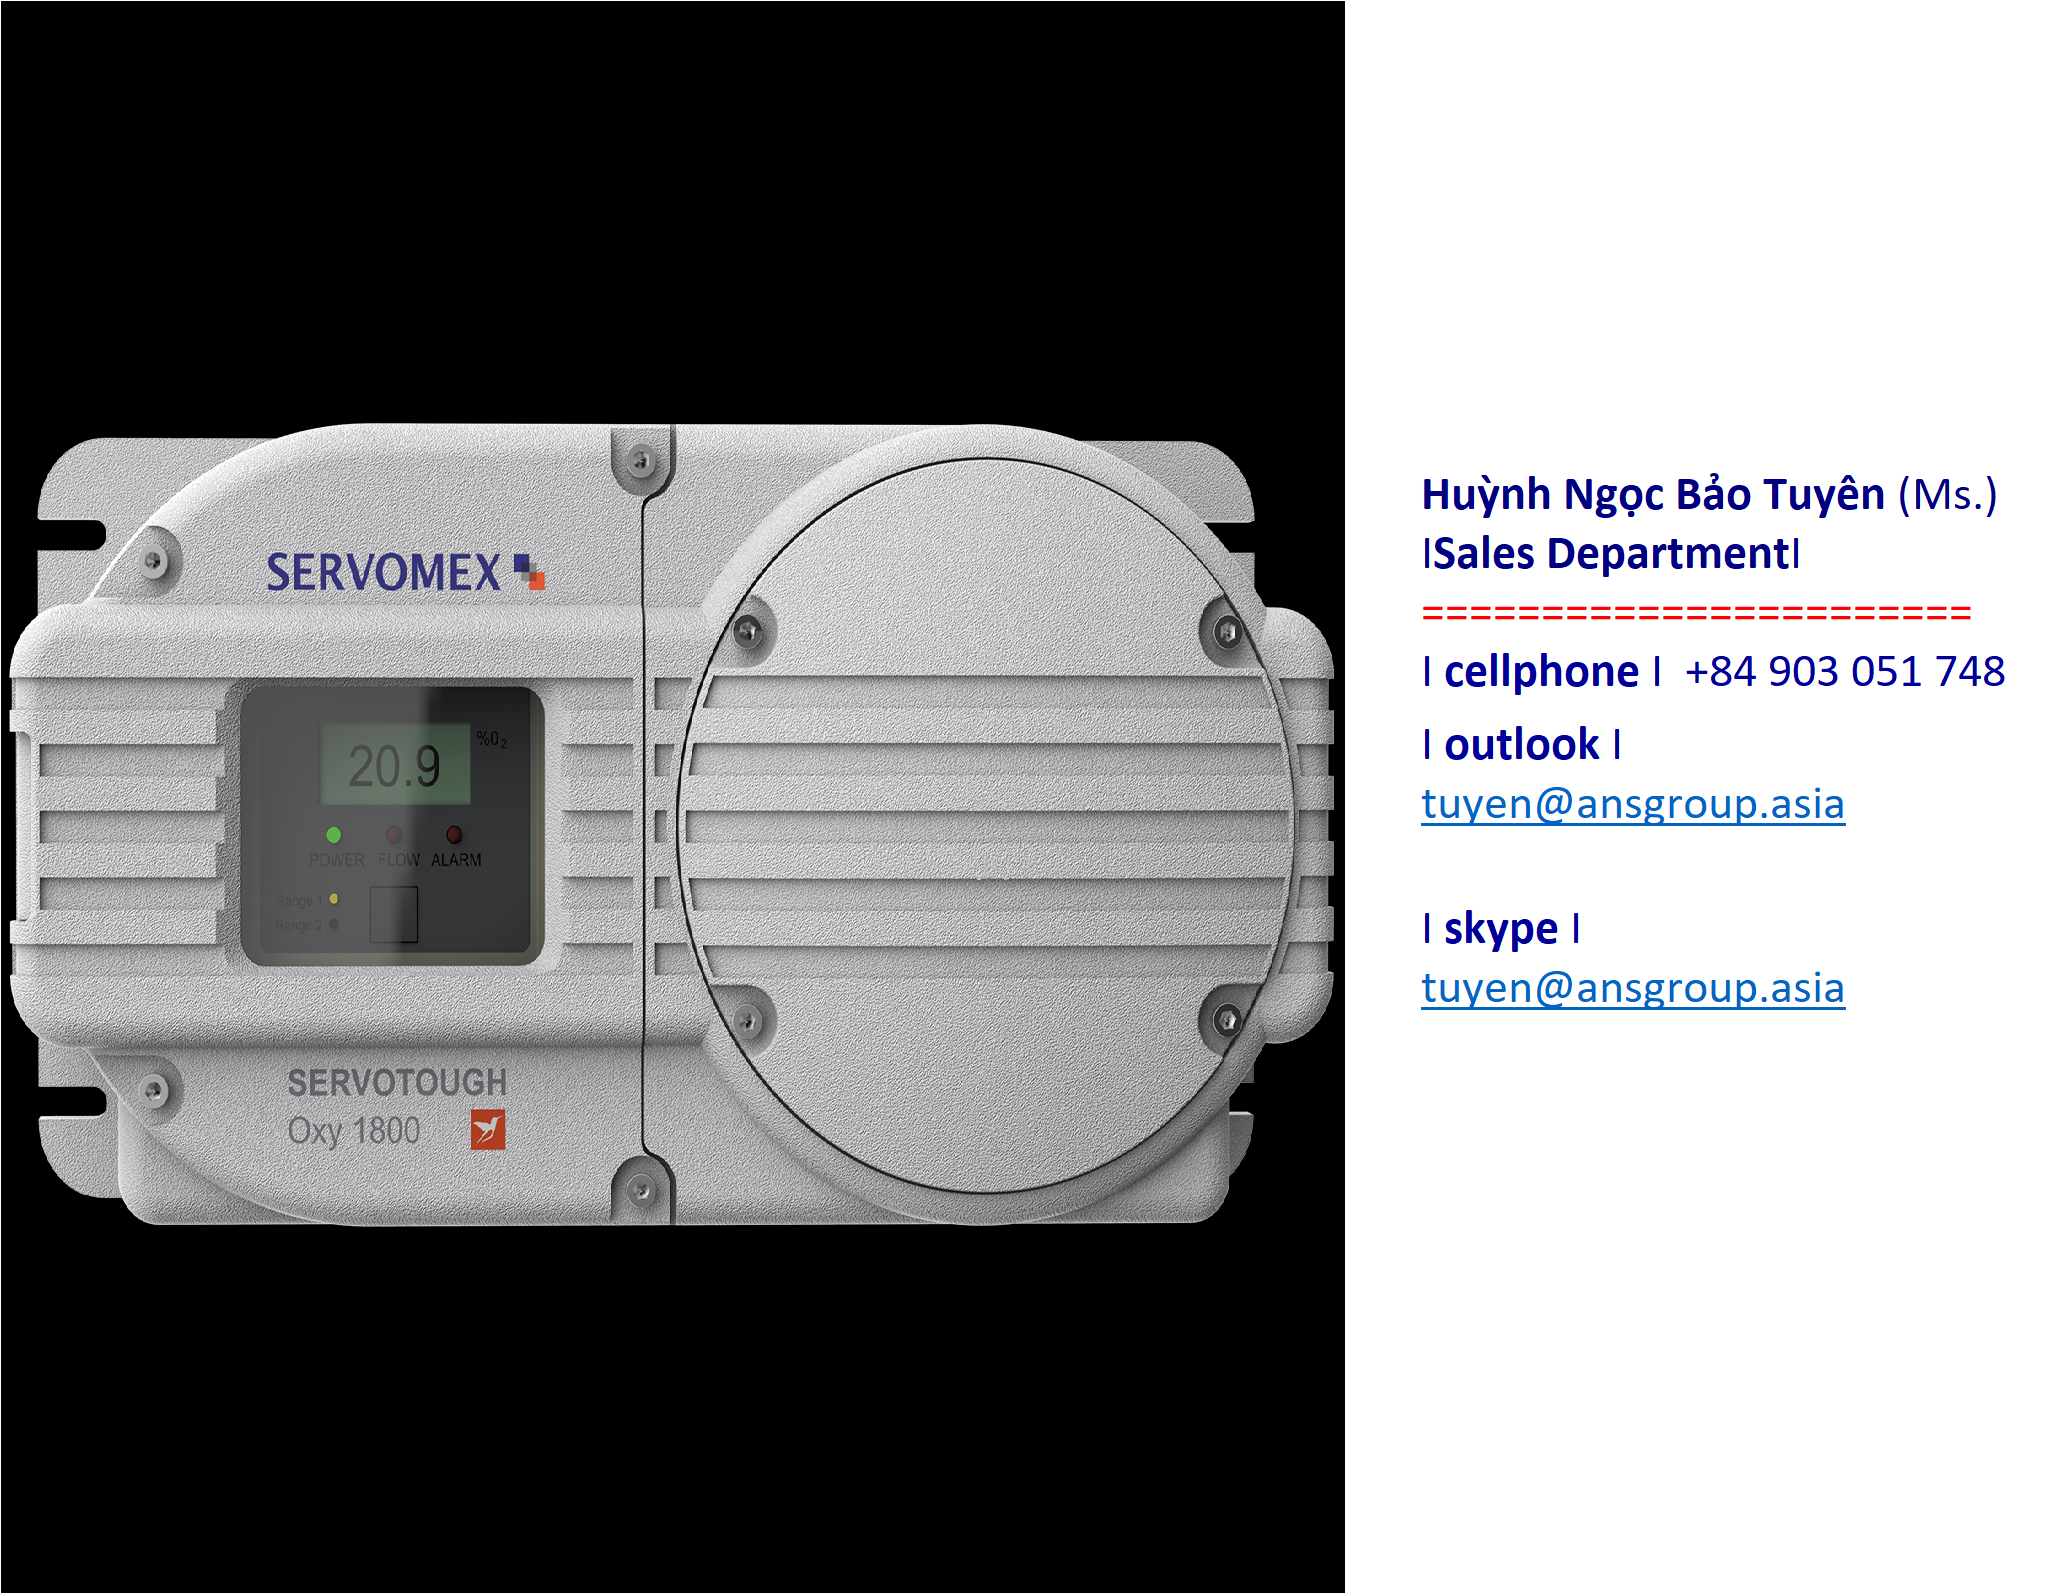 servoflex-5200-multi-purpose-analyser.png